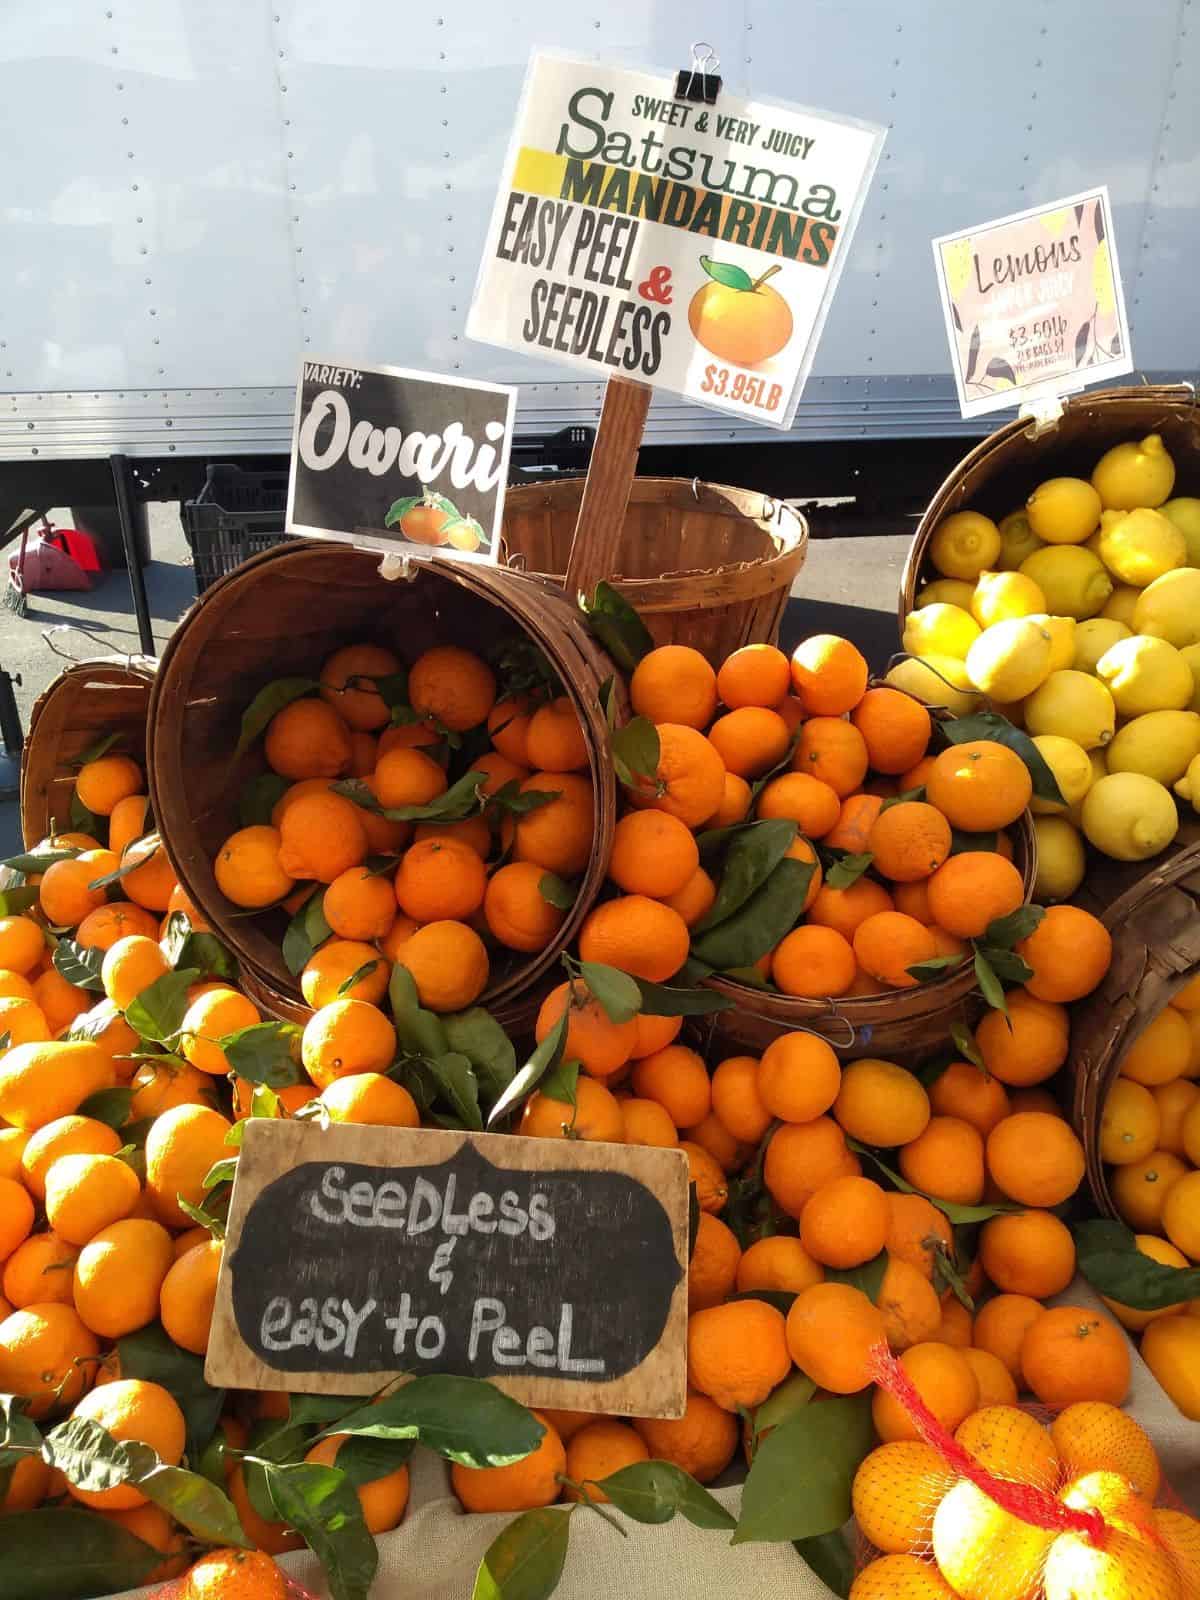 A farmer's market display with baskets of the Owari variety of Satsuma mandarins. 